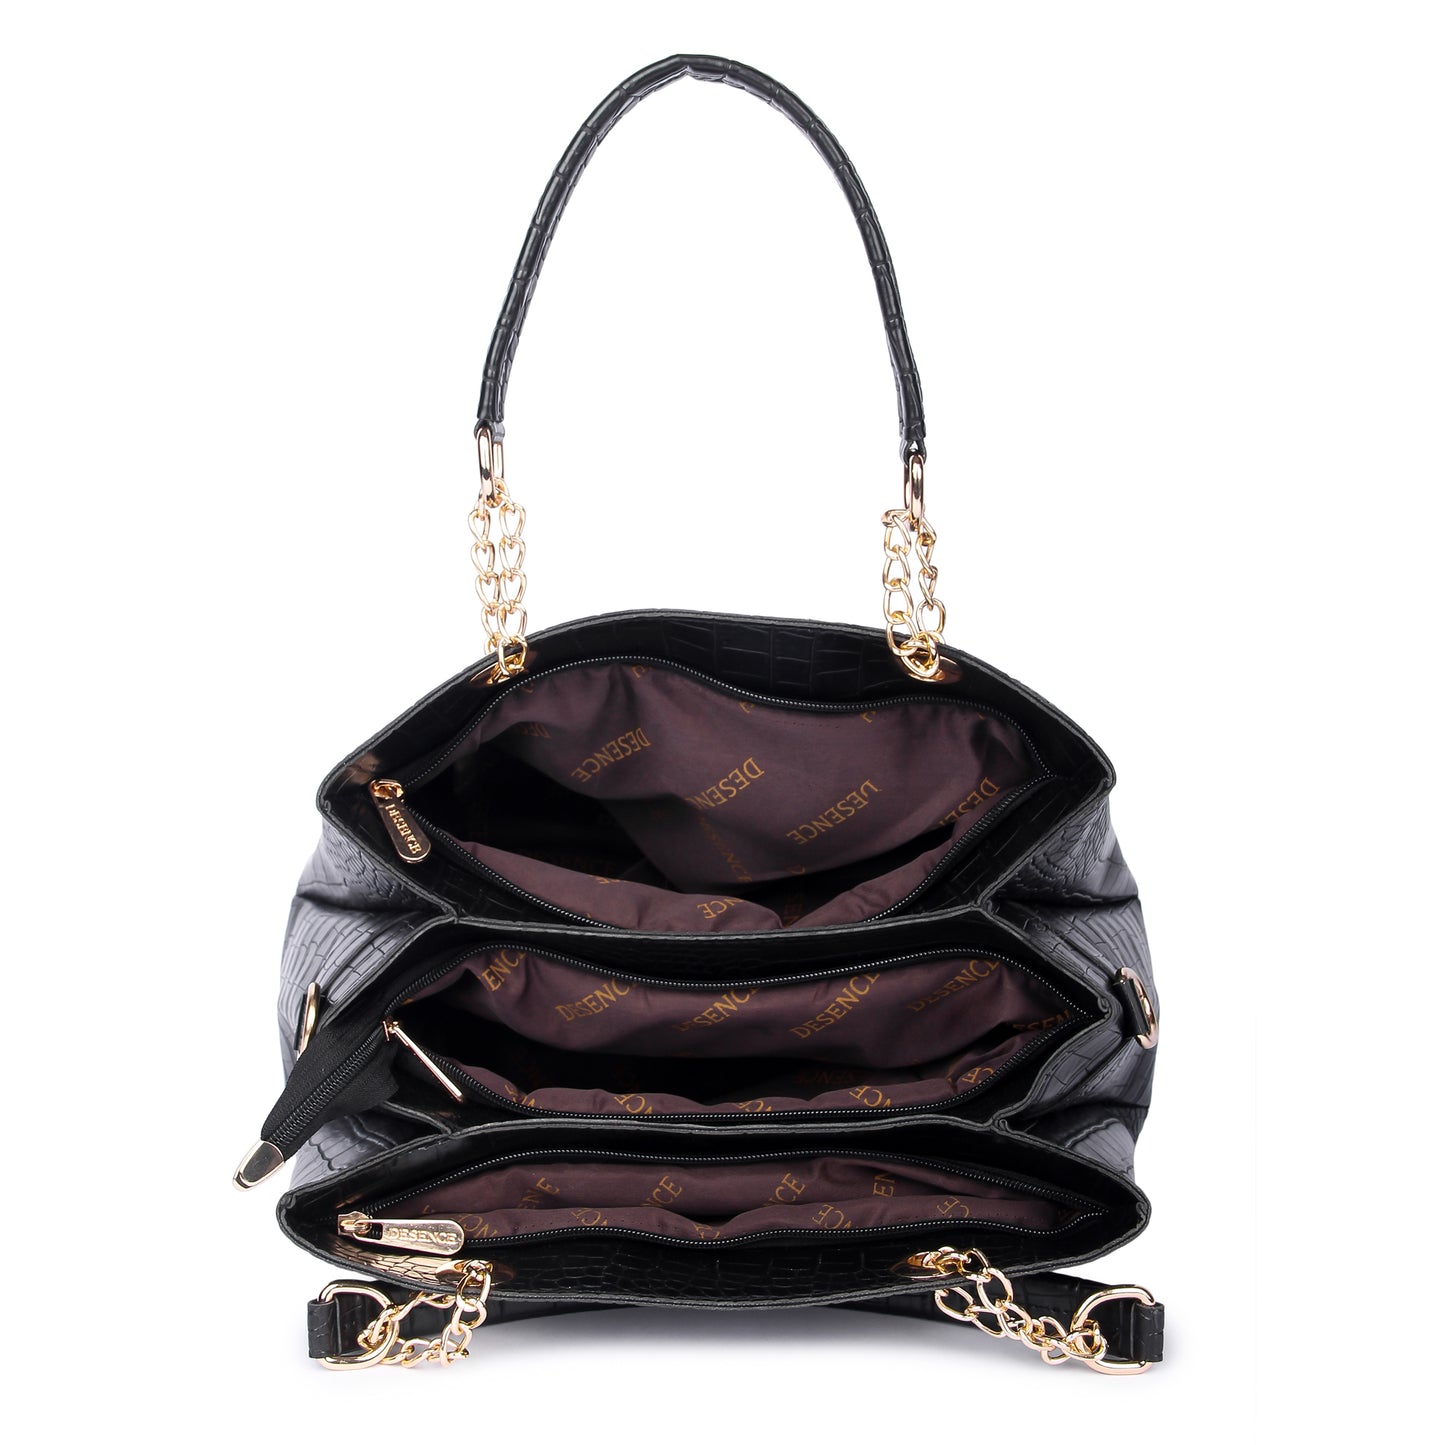 Stylish Handbag for Woman with Premium Quality